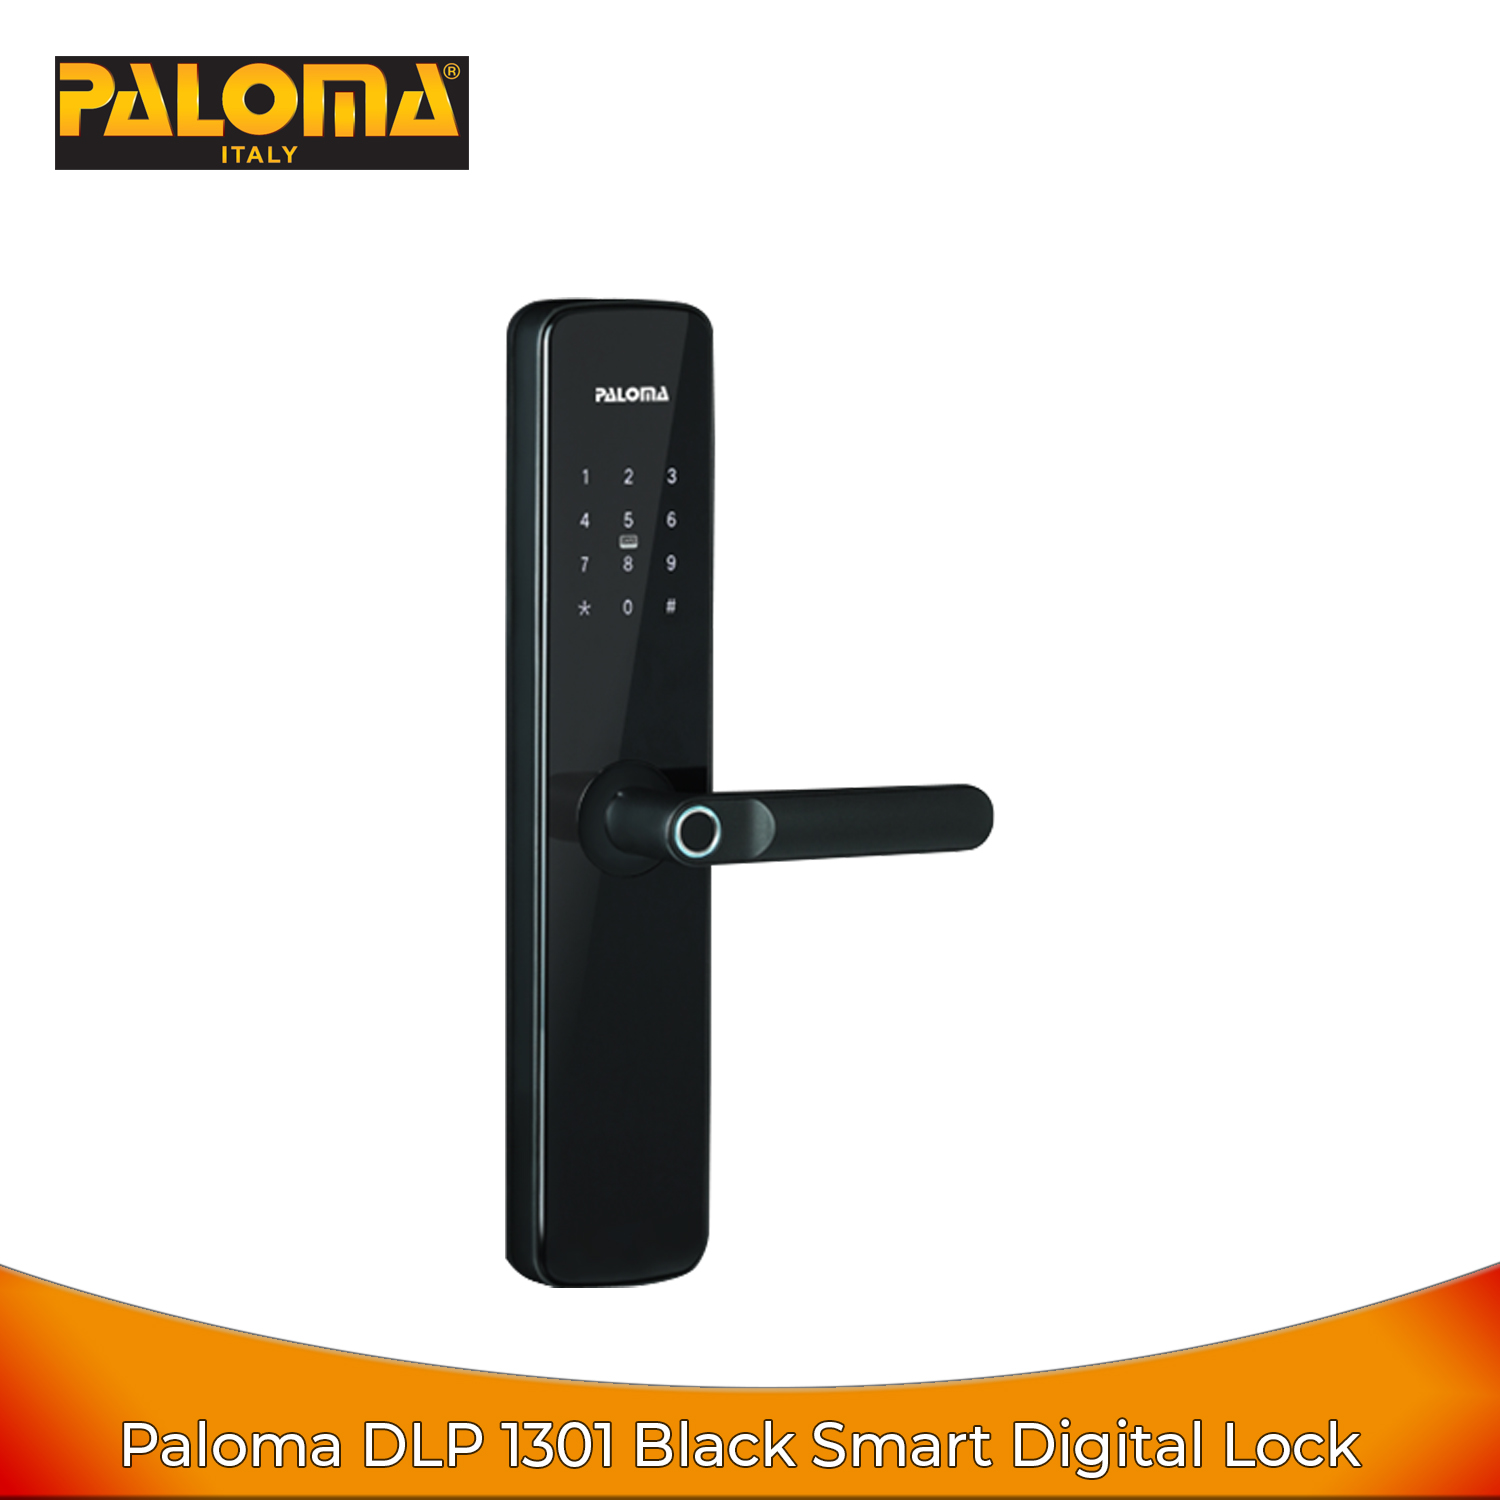 Paloma DLP 1301 Smart Digital Lock Black - Handle Kunci